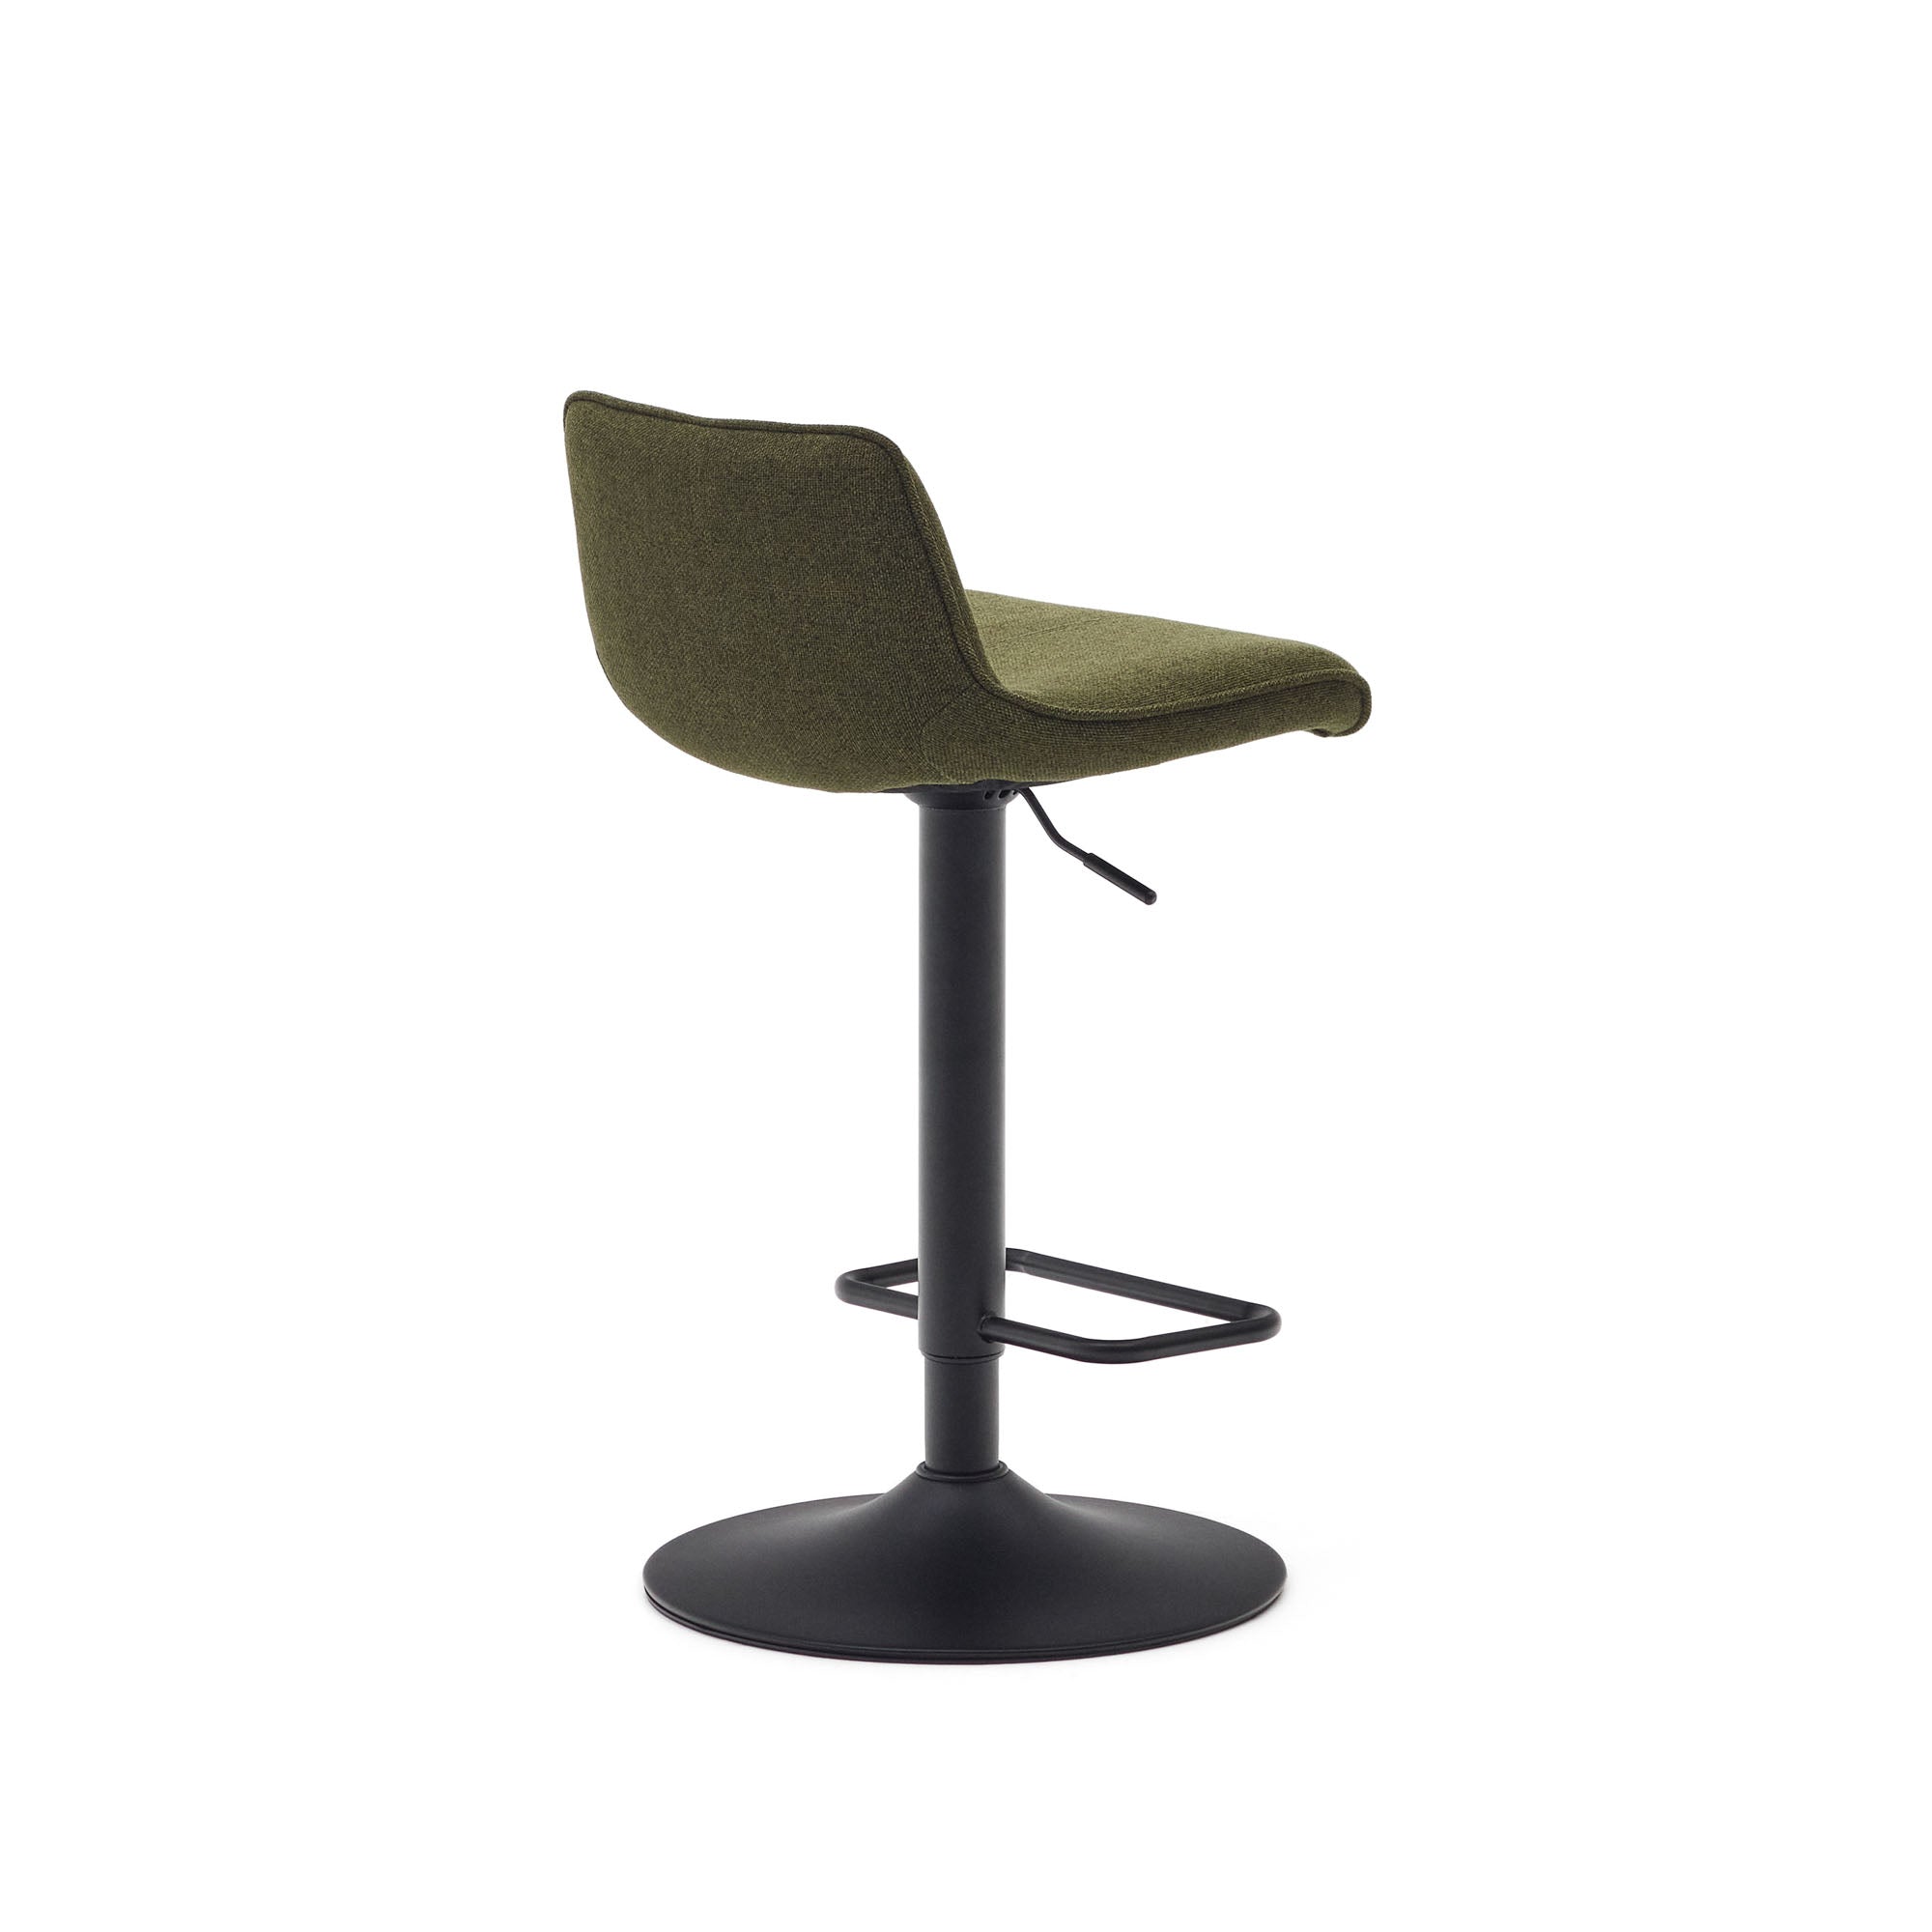 Zenda stool in dark green chenille and matt black steel height 81-102 cm